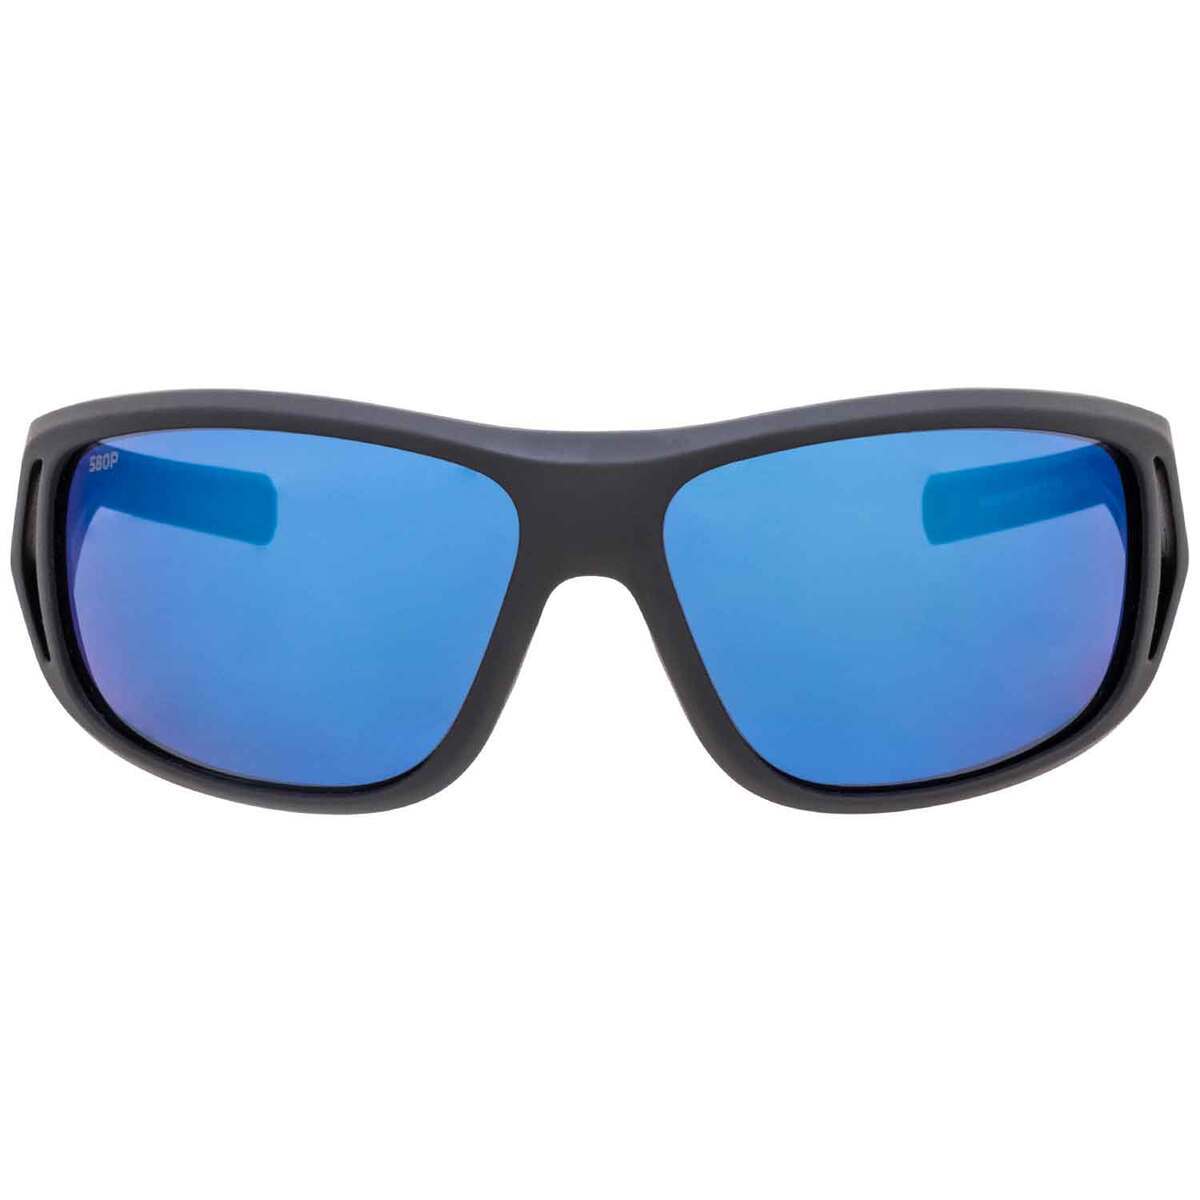 Costa Montauk Polarized Sunglasses - Black/Blue | Sportsman's Warehouse